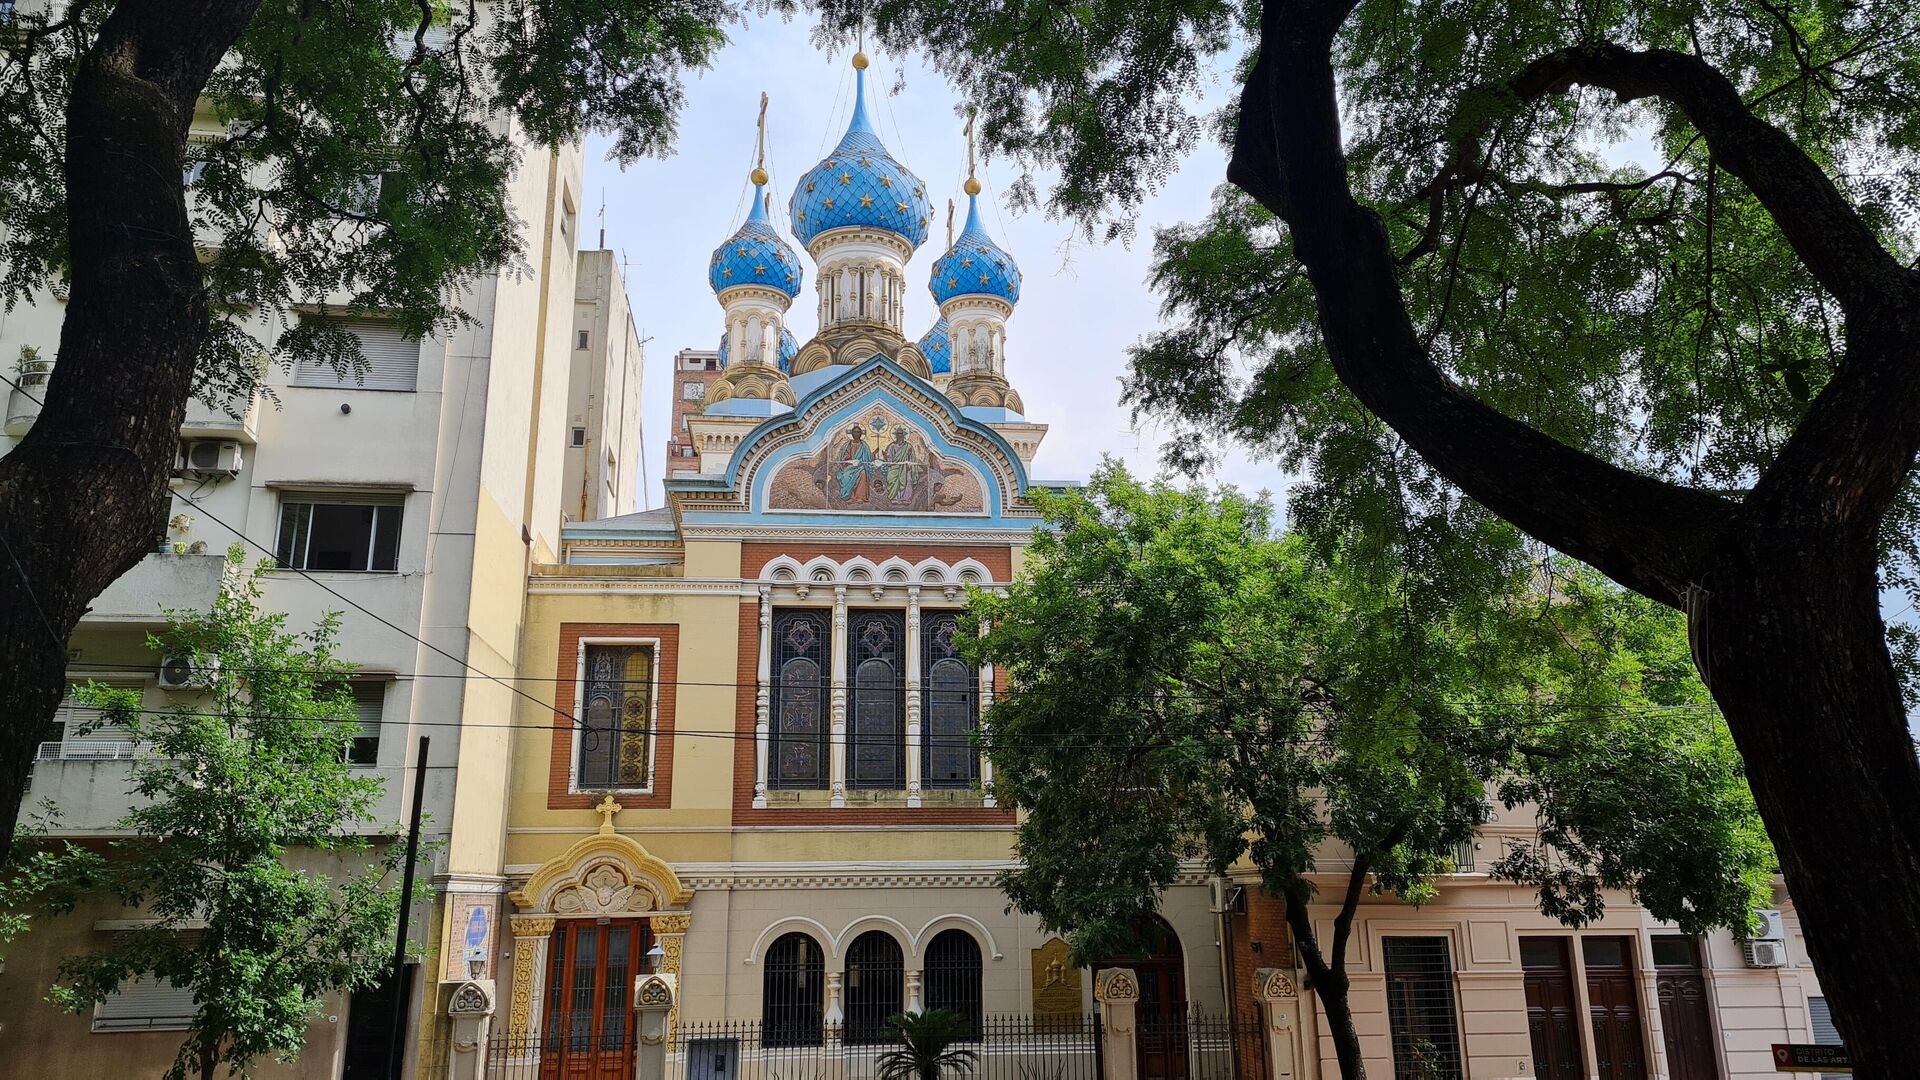 Las cúpulas azules de la Iglesia ortodoxa son la imagen de referencia de la cultura rusa en Argentina - Sputnik Mundo, 1920, 05.01.2022